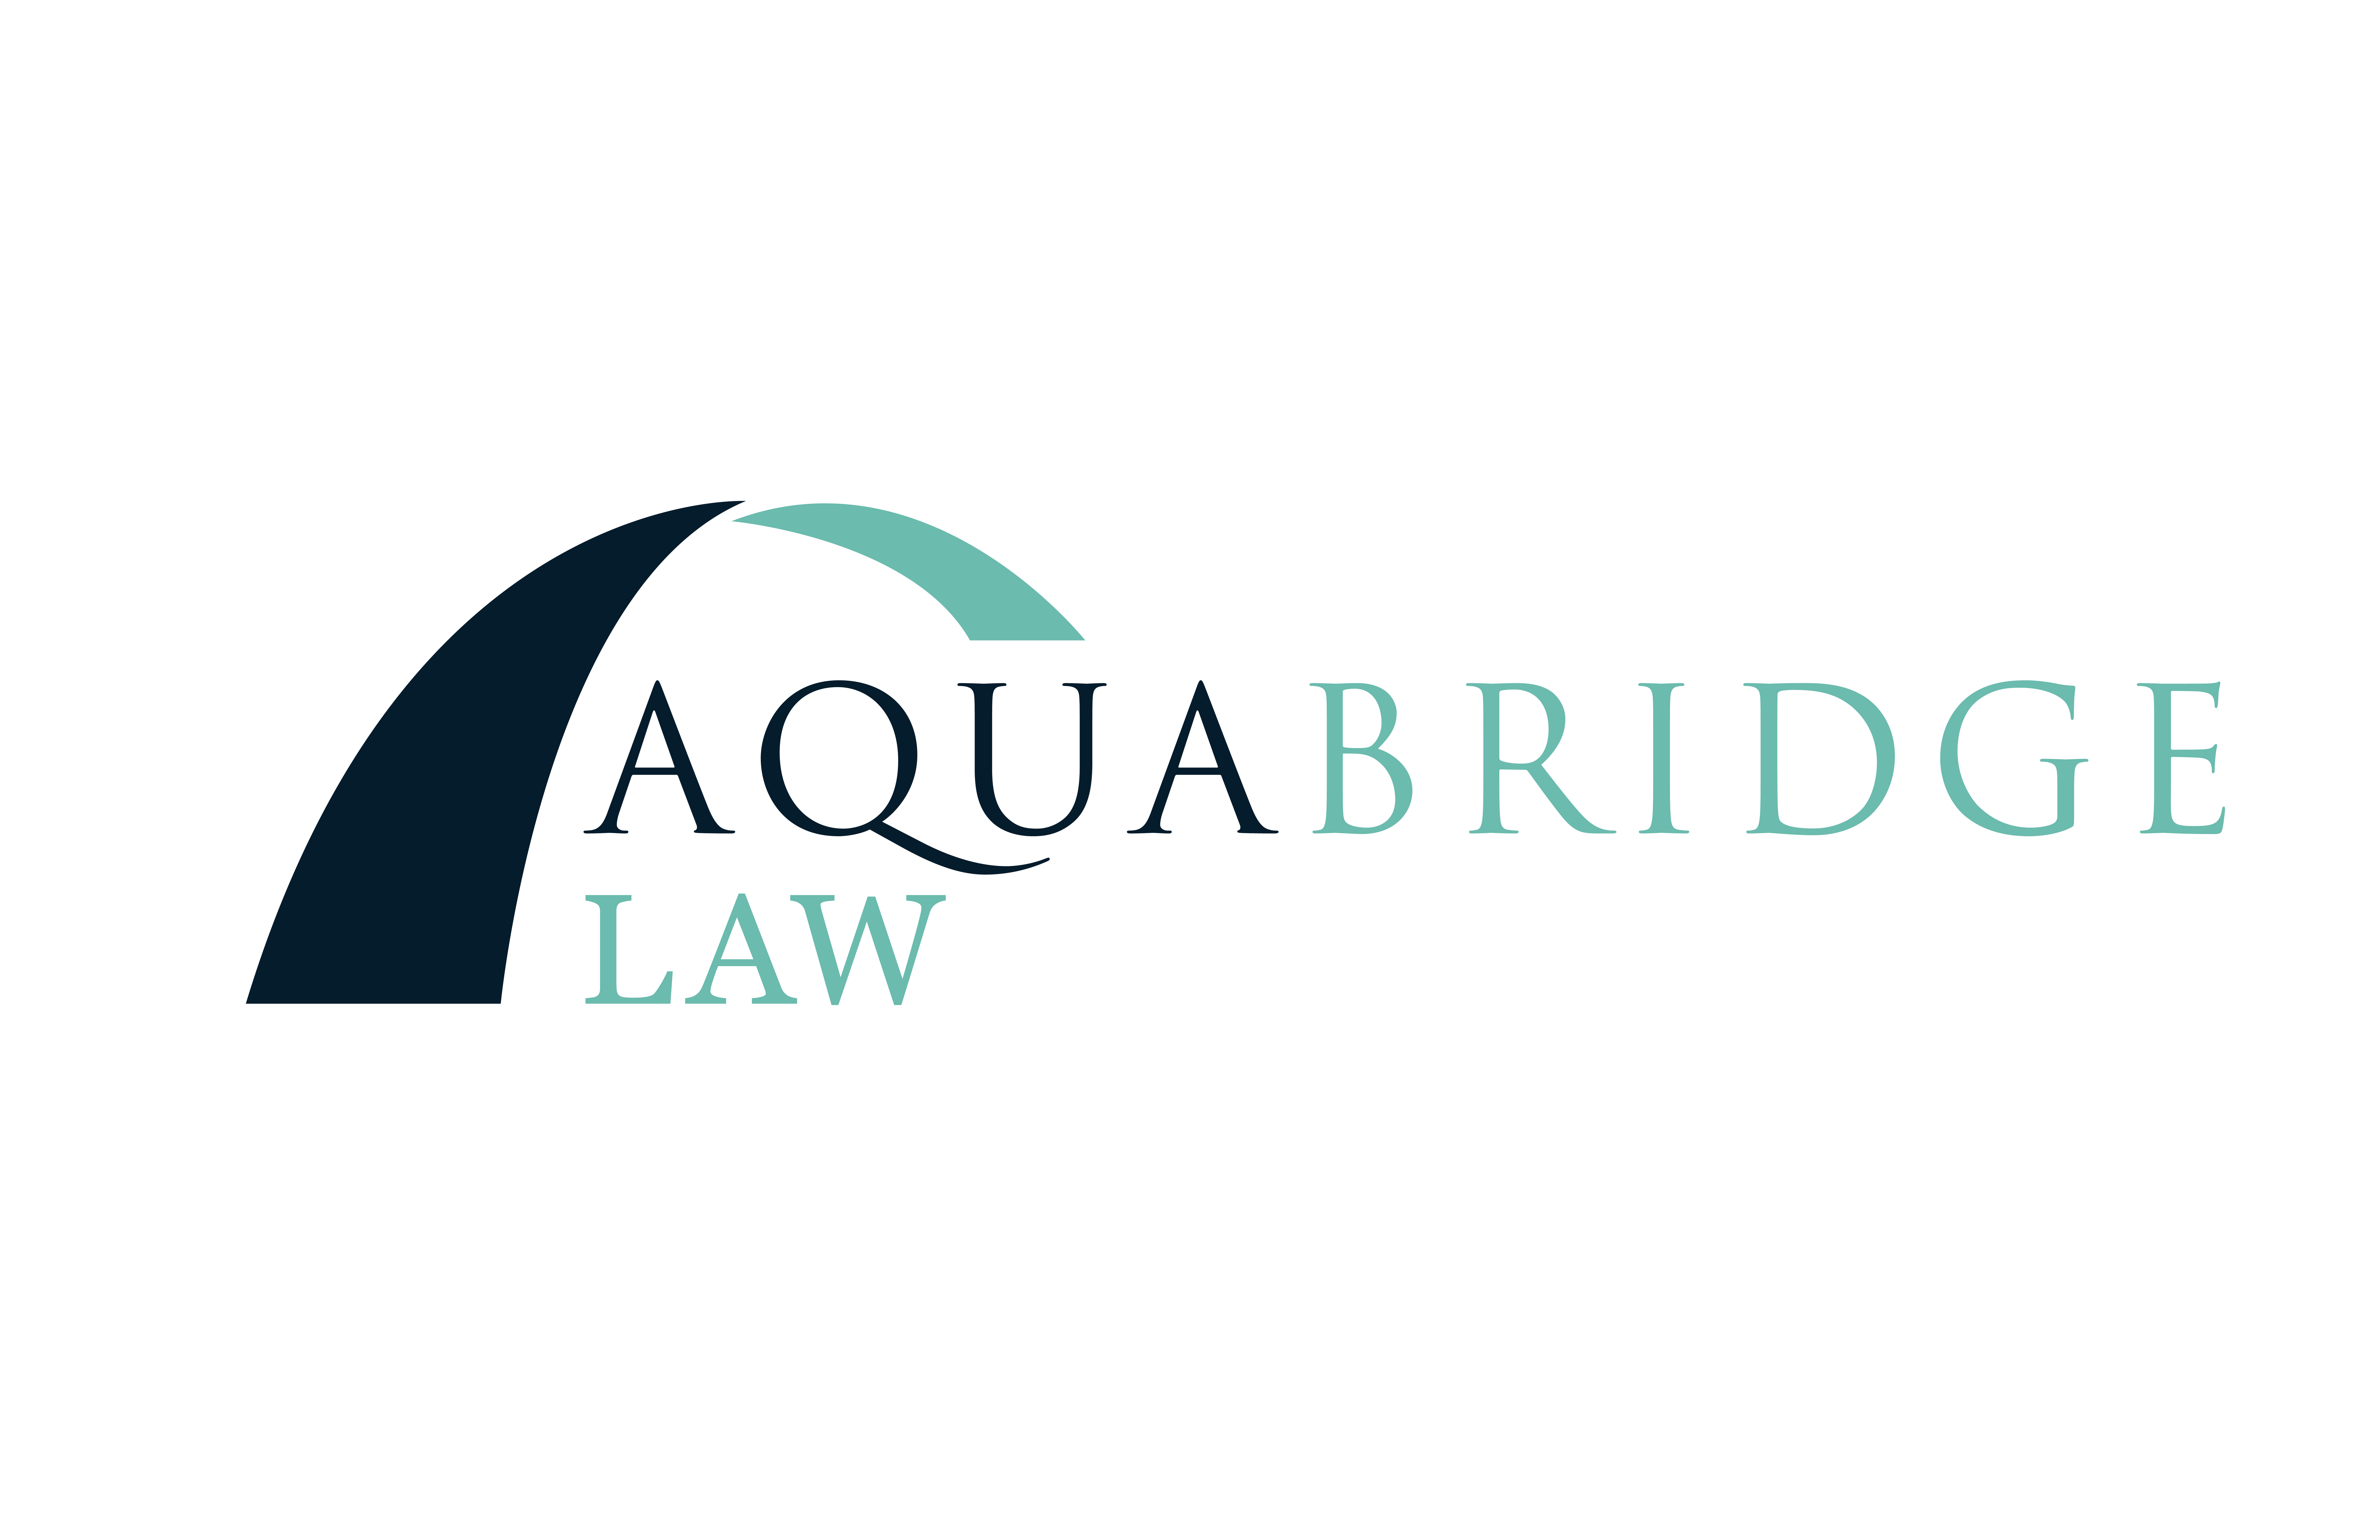 Aquabridge company logo